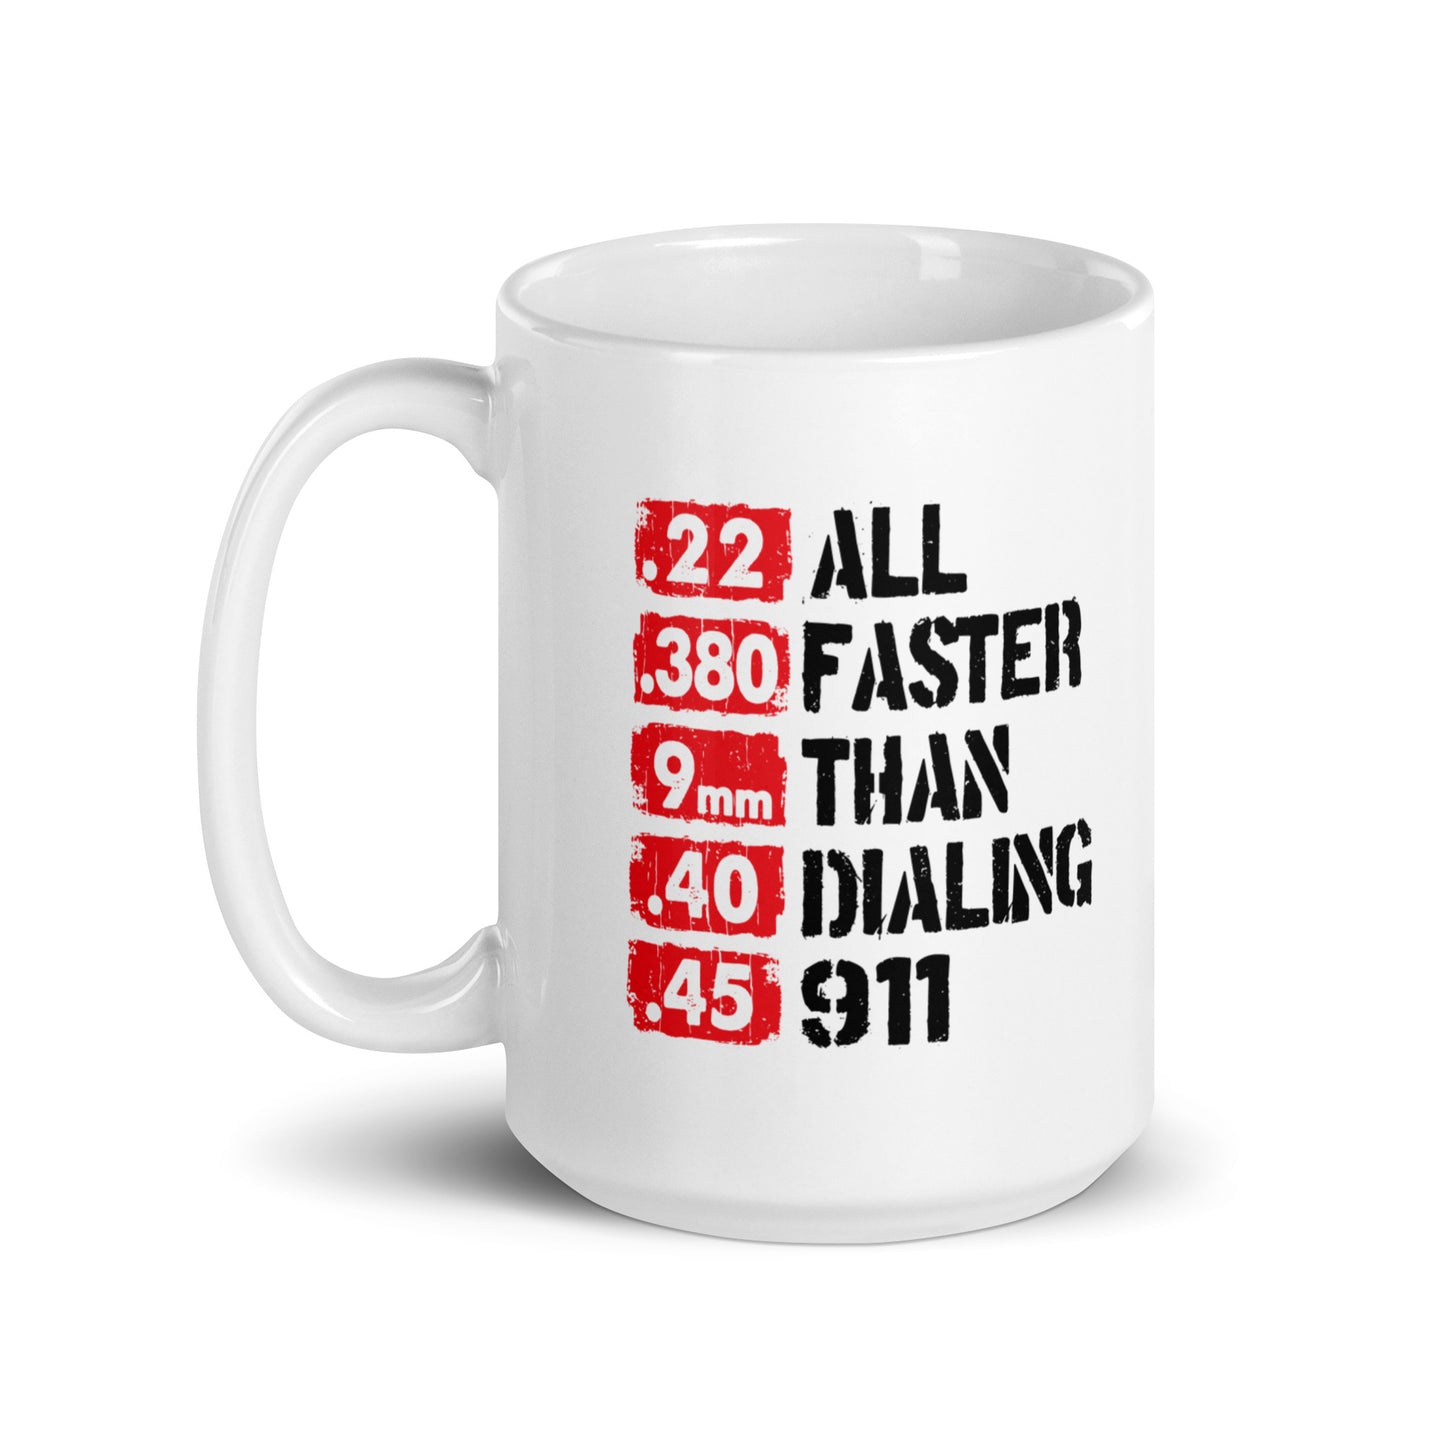 All Faster Than 911 White glossy mug